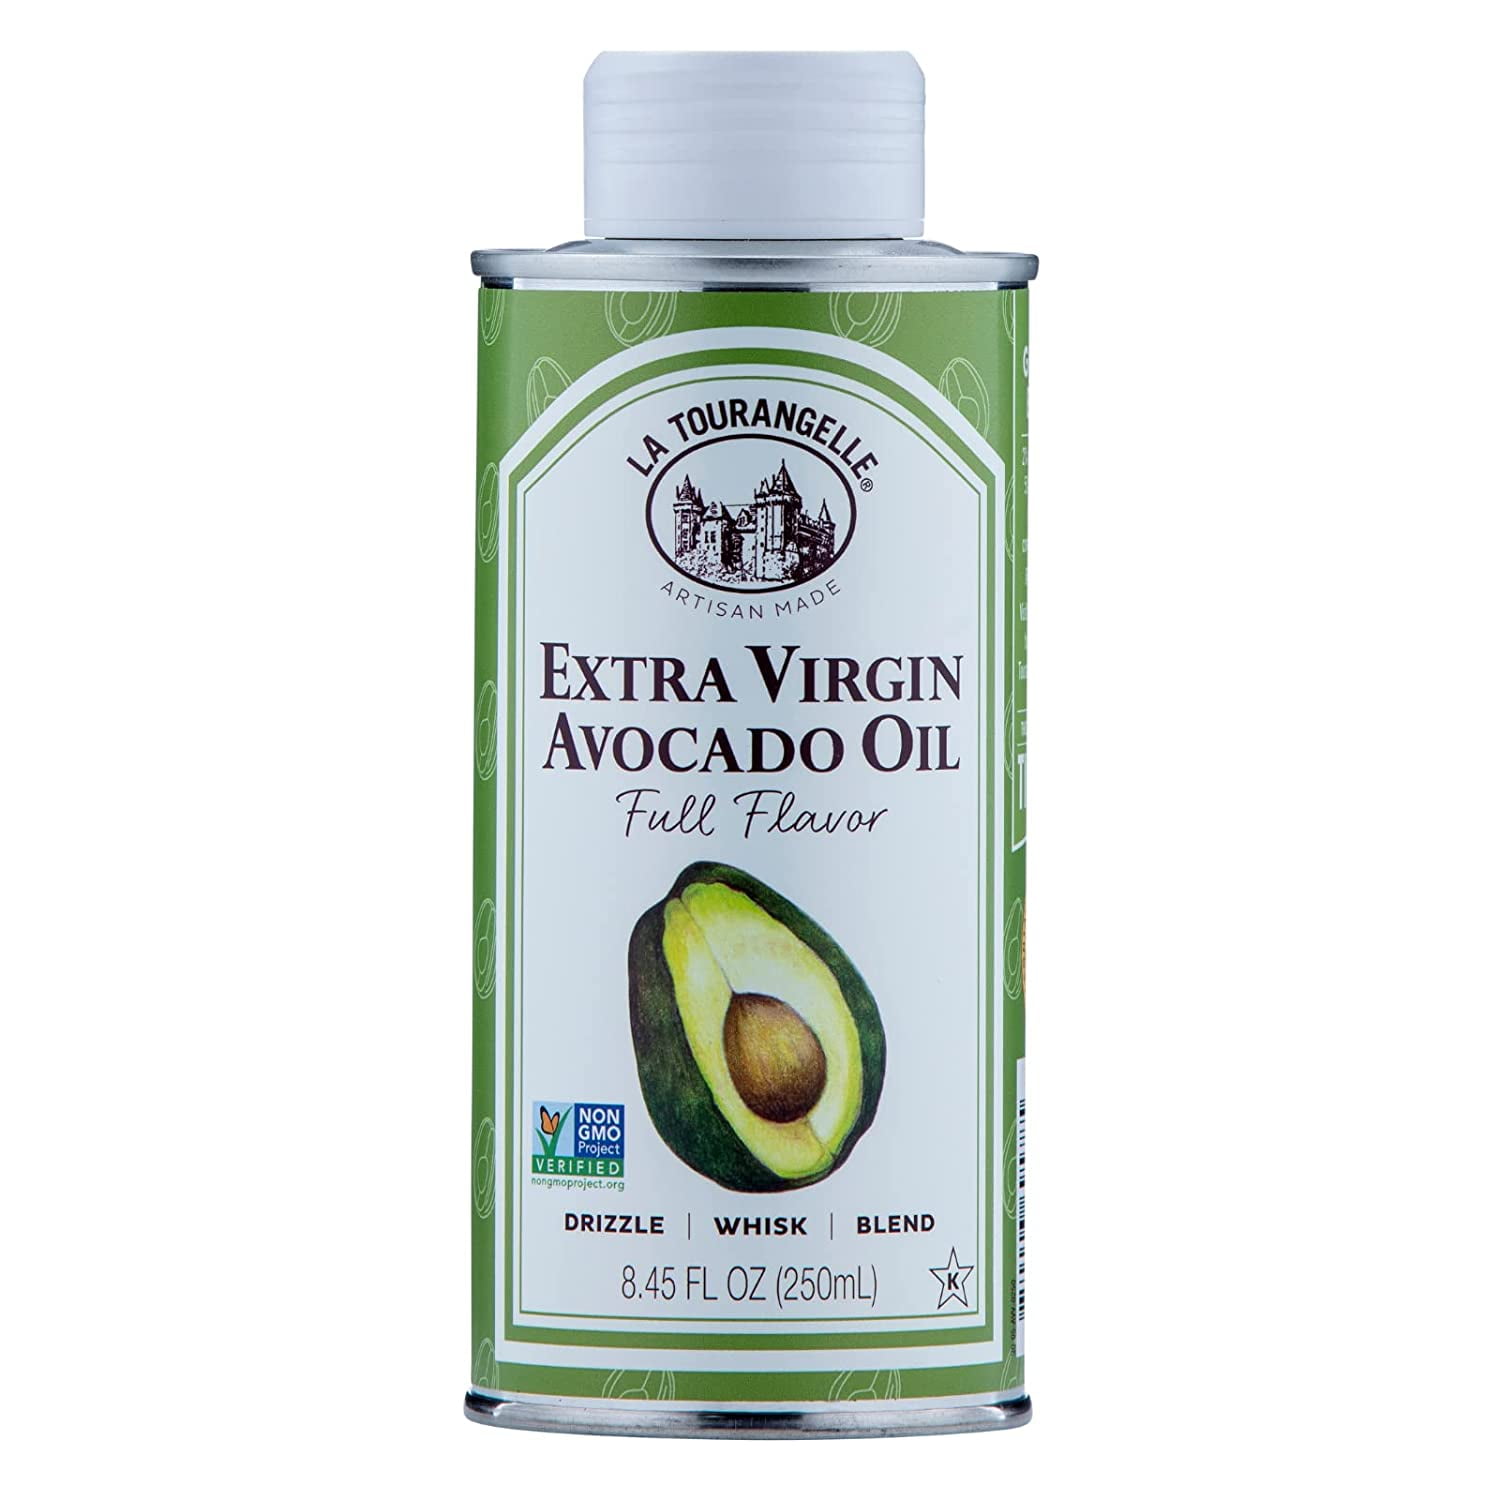 La Tourangelle Avocado Oil, 16.9 fl oz - Kroger